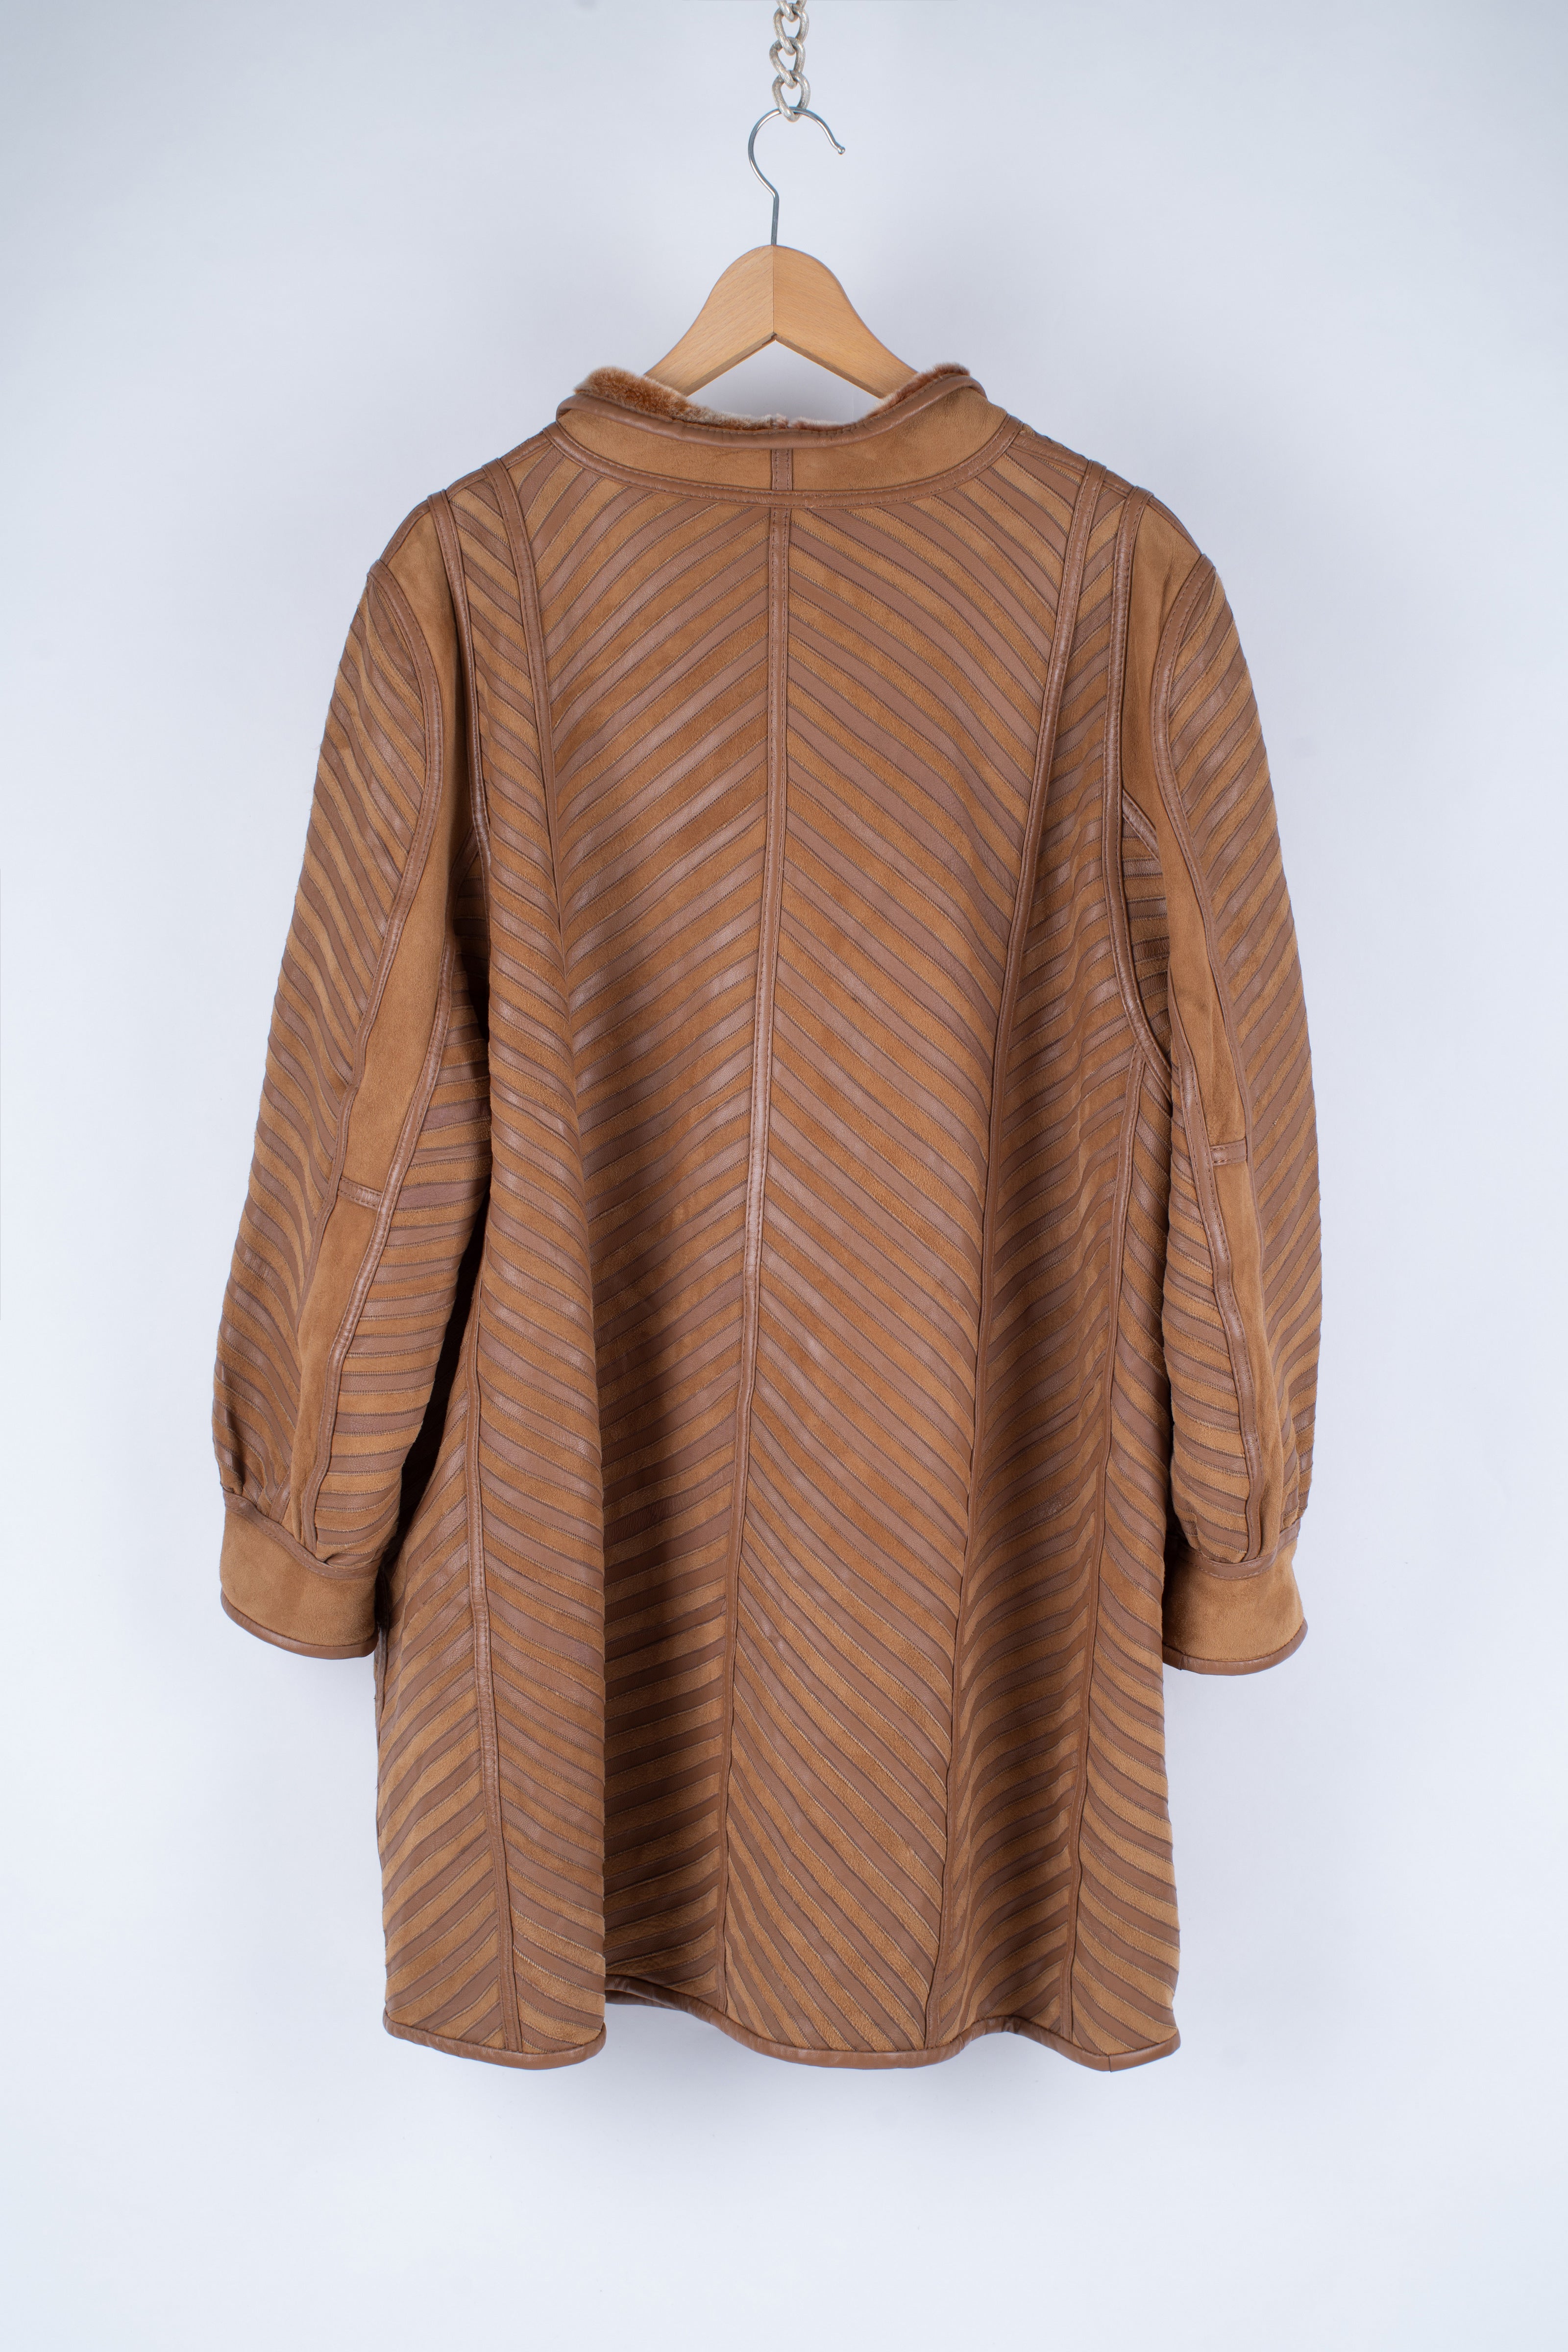 Woman's Camel Brown Soft & Lightweight Lambskin Shearling Coat, XL